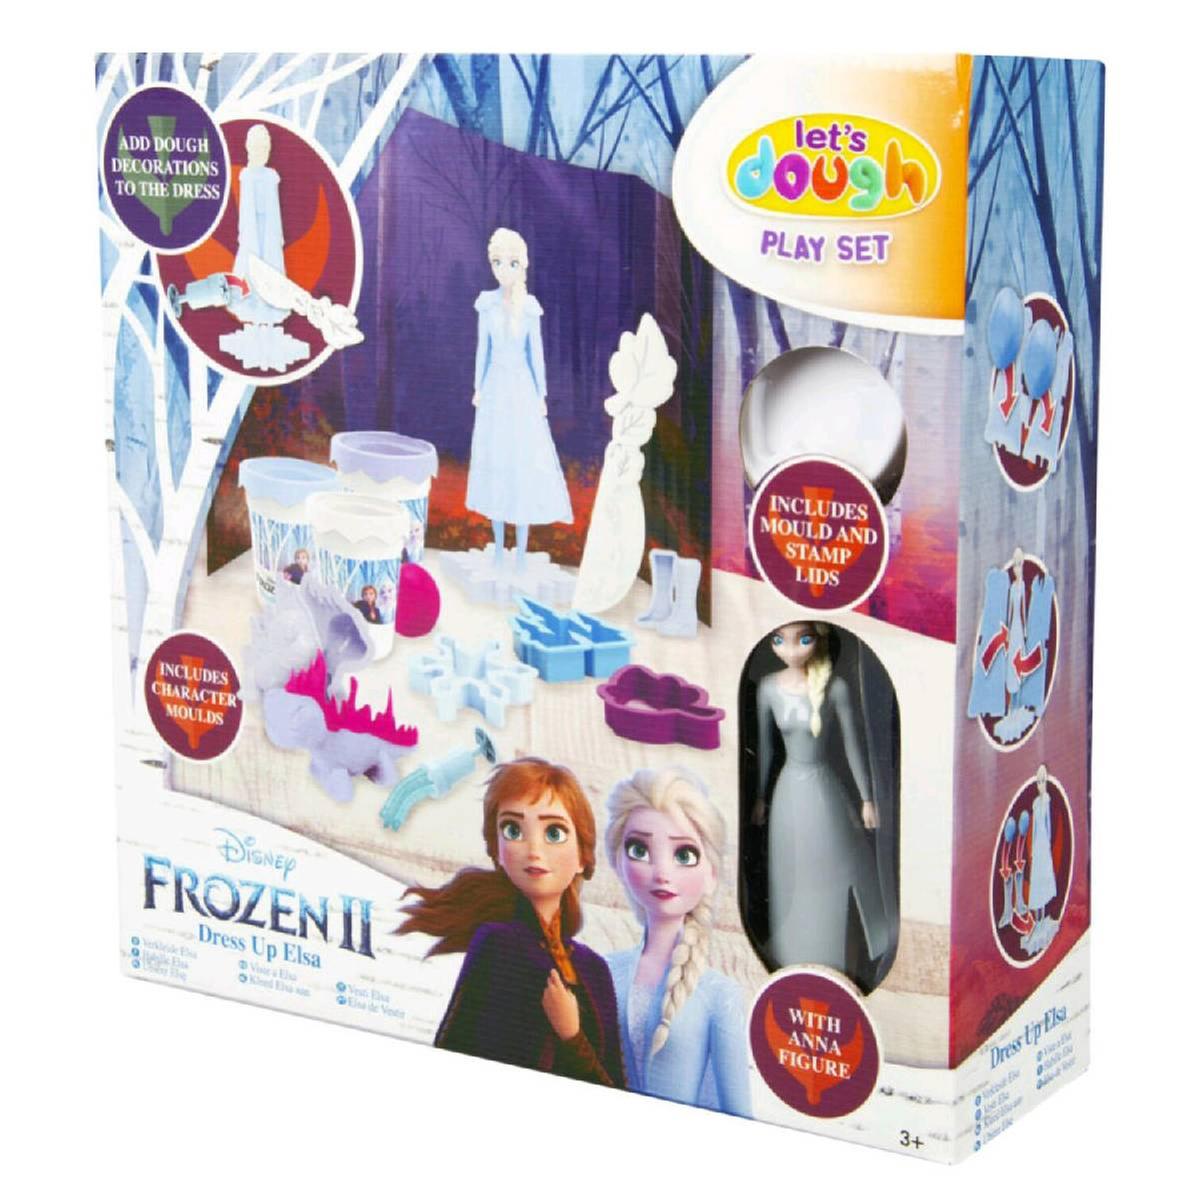 Condición riñones Sui Frozen - Viste a Anna y Elsa con Plastilina Frozen 2 | Dough Licencia |  Toys"R"Us España